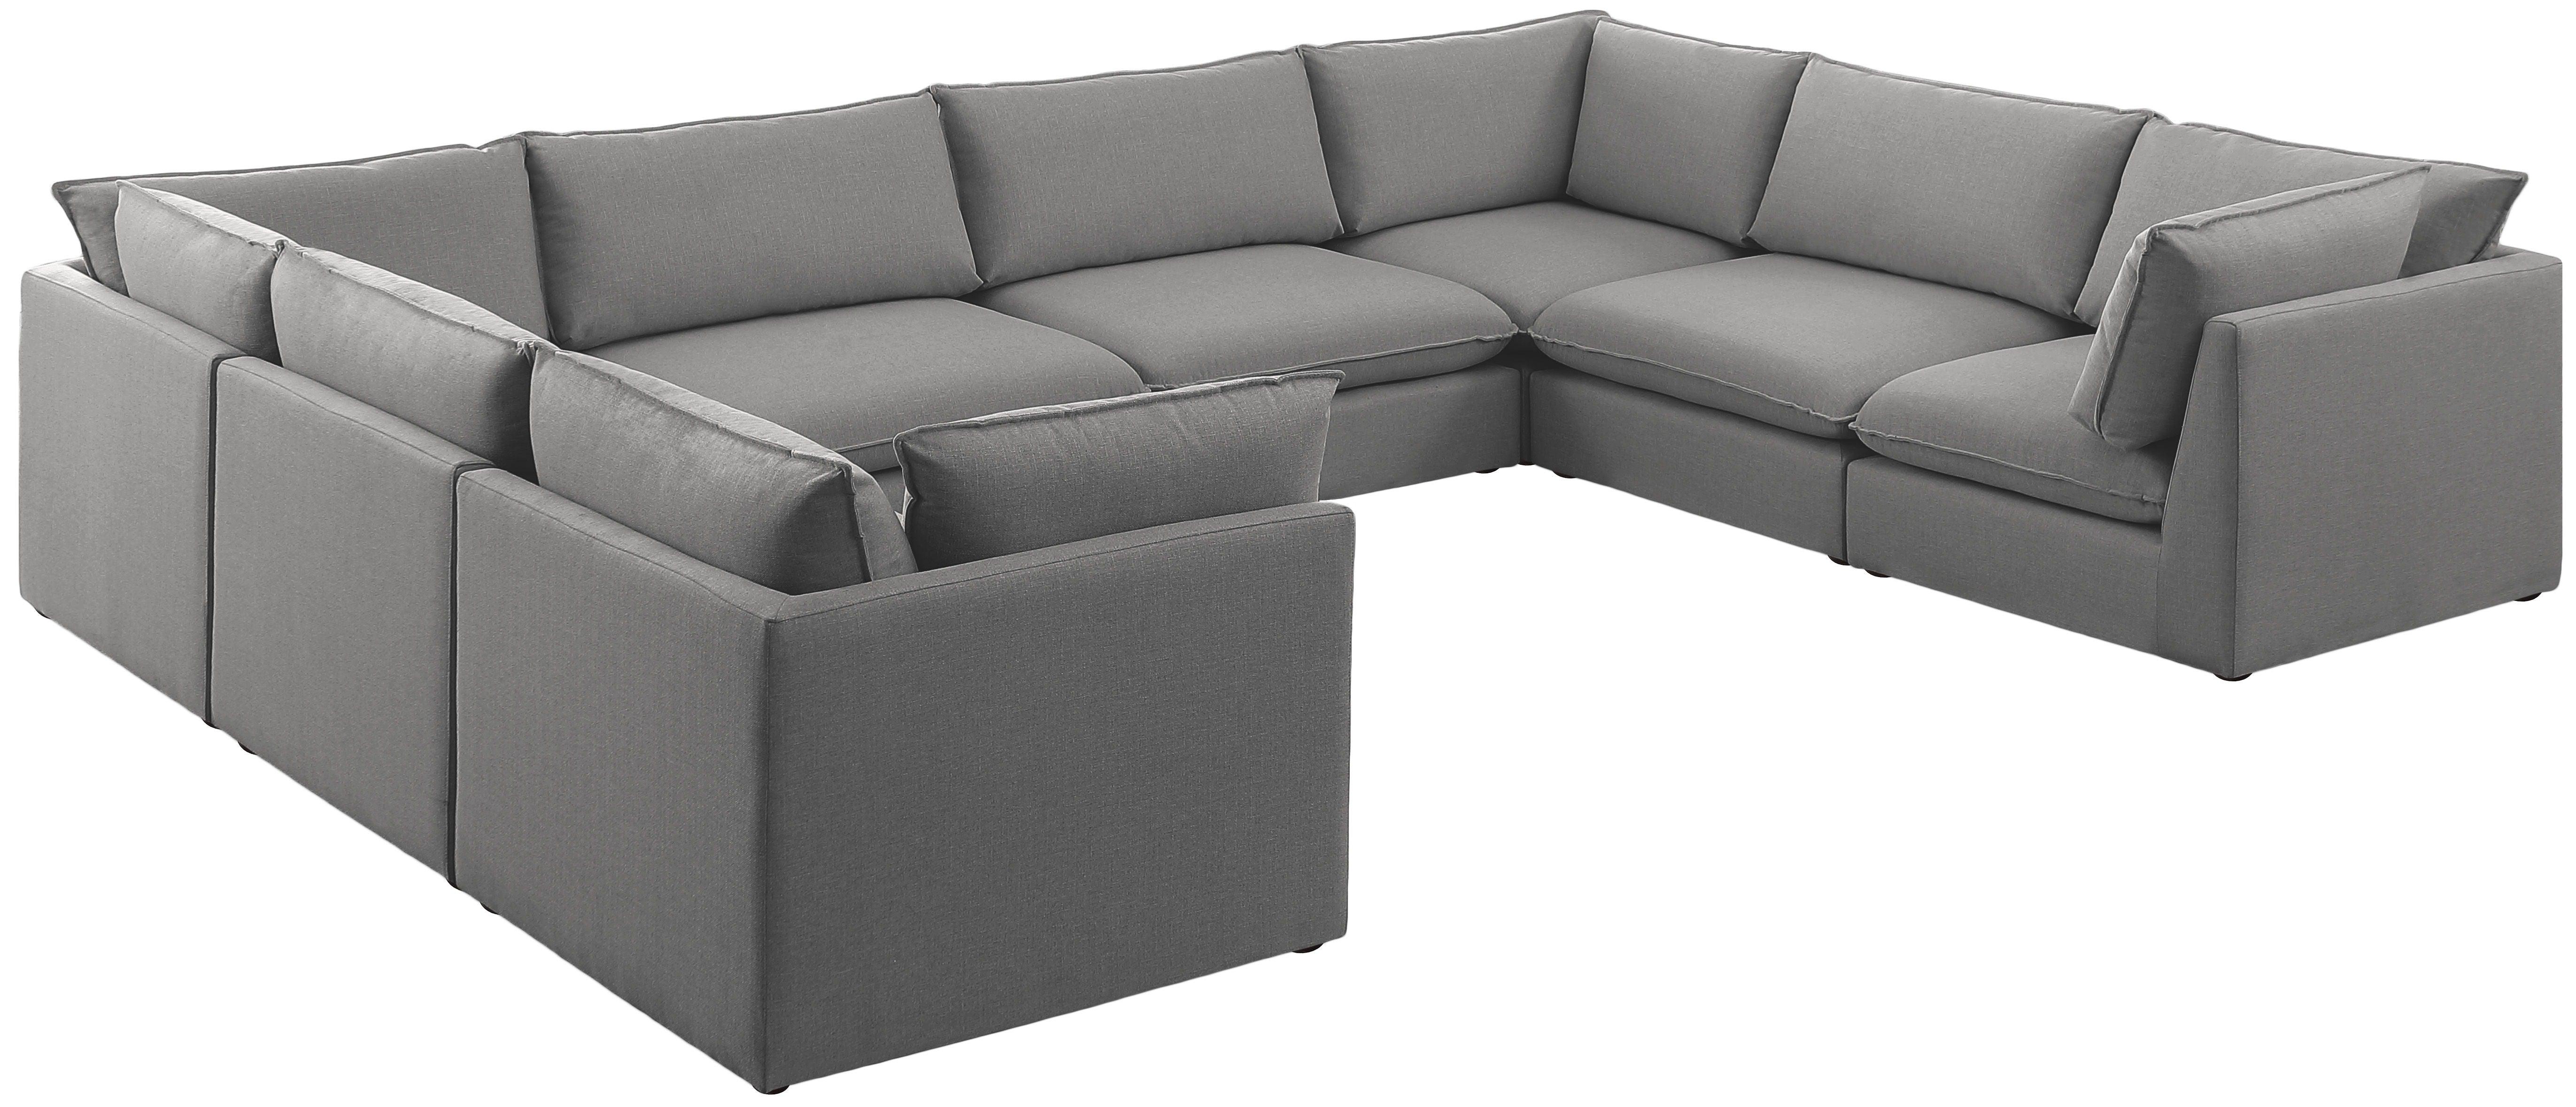 Meridian Furniture - Mackenzie - Modular Sectional 8 Piece - Gray - 5th Avenue Furniture